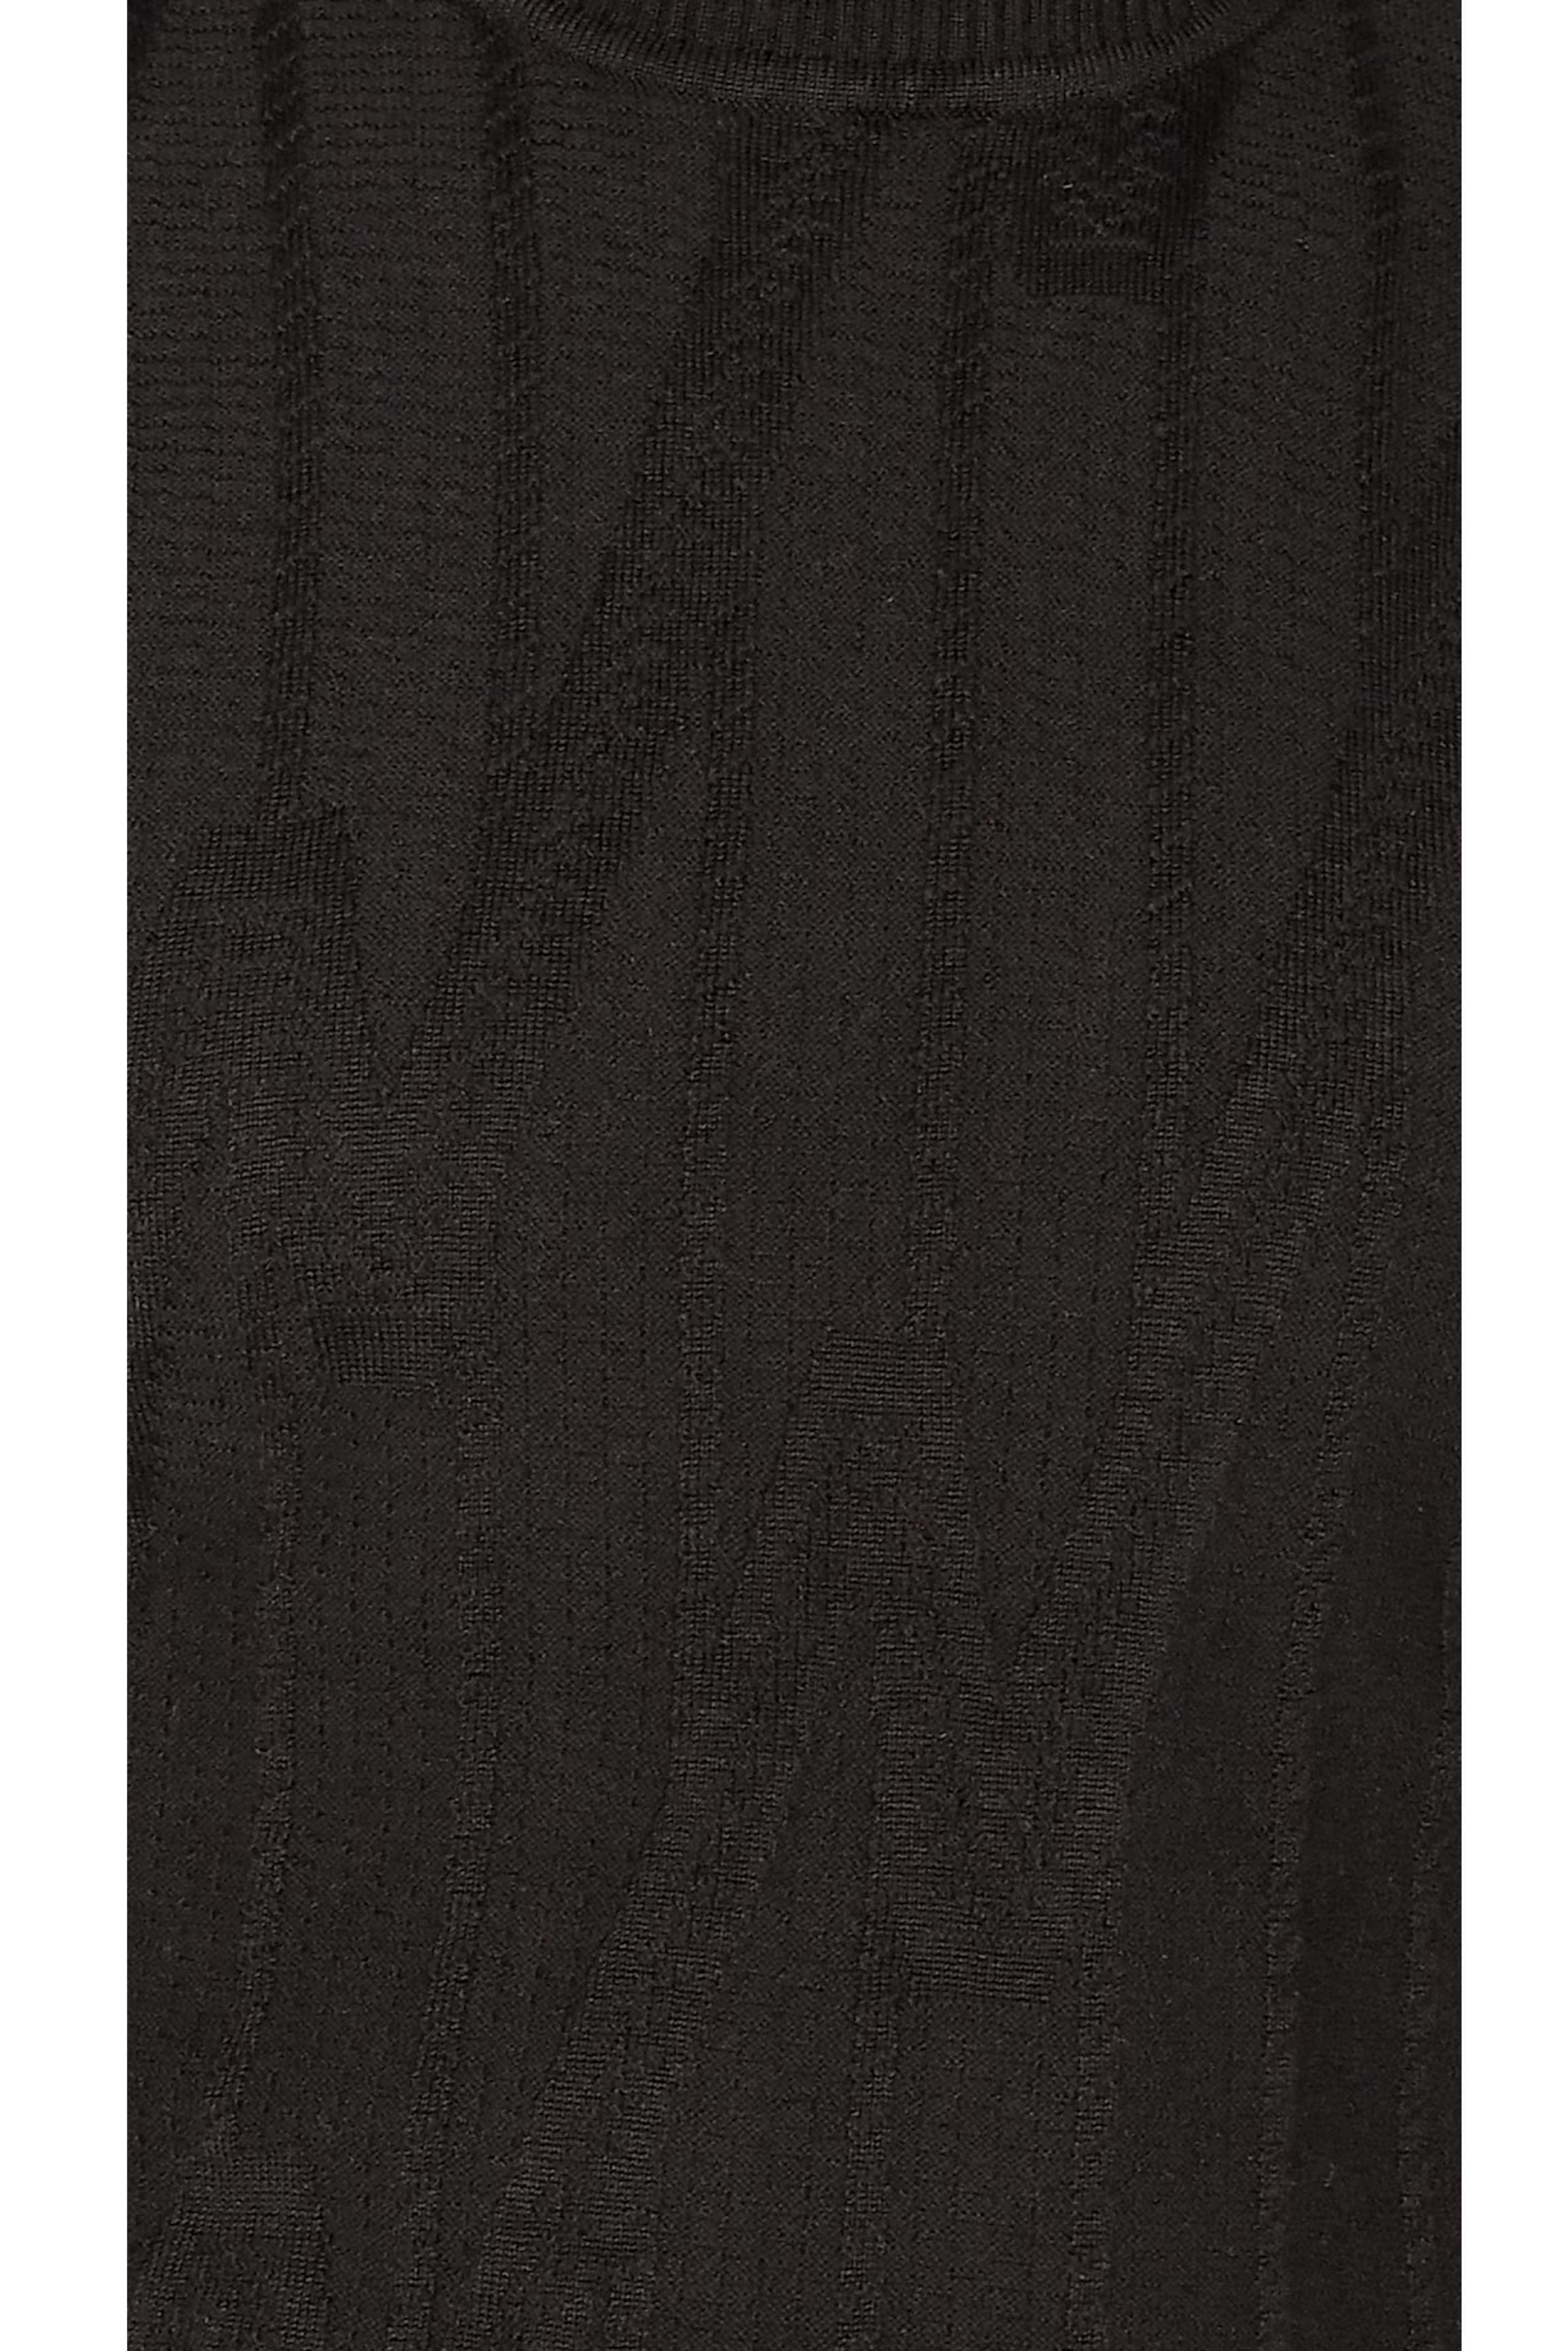 Lavane Short Sleeve Knit Shirt 1908 - Mastroianni Fashions